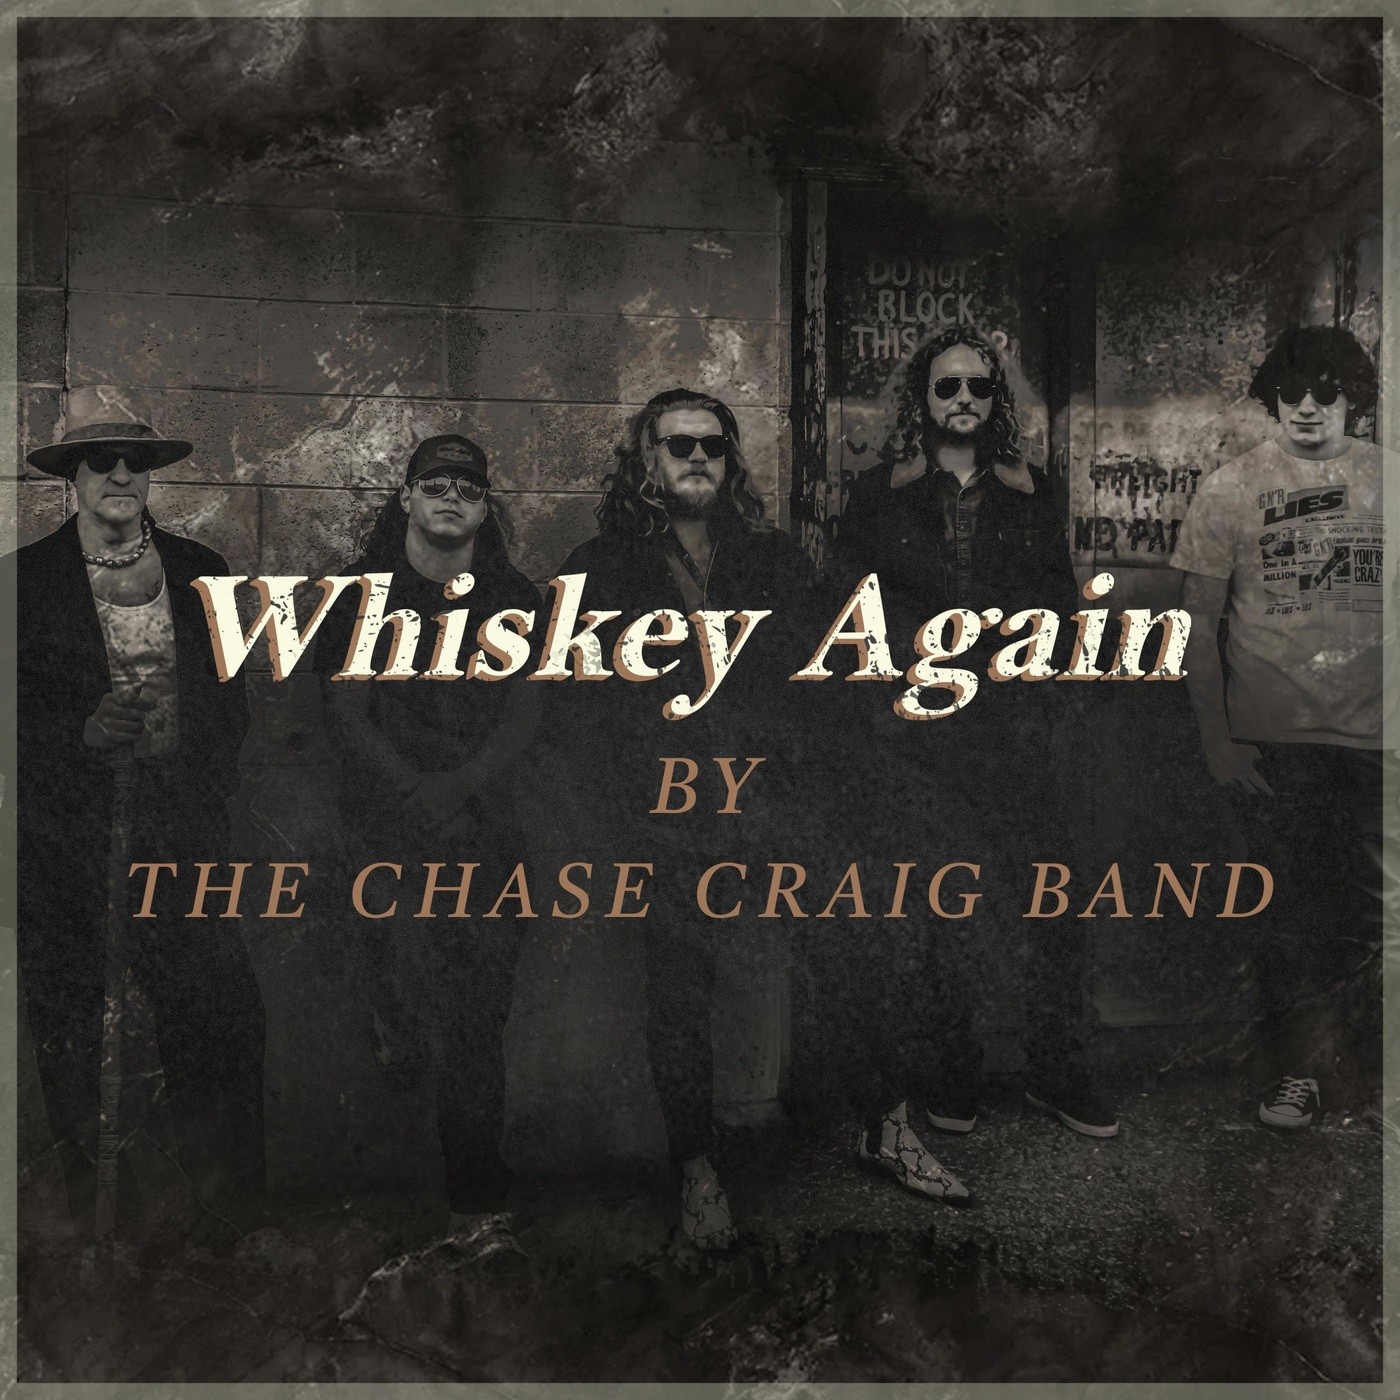 The Chase Craig Band - Whiskey Again